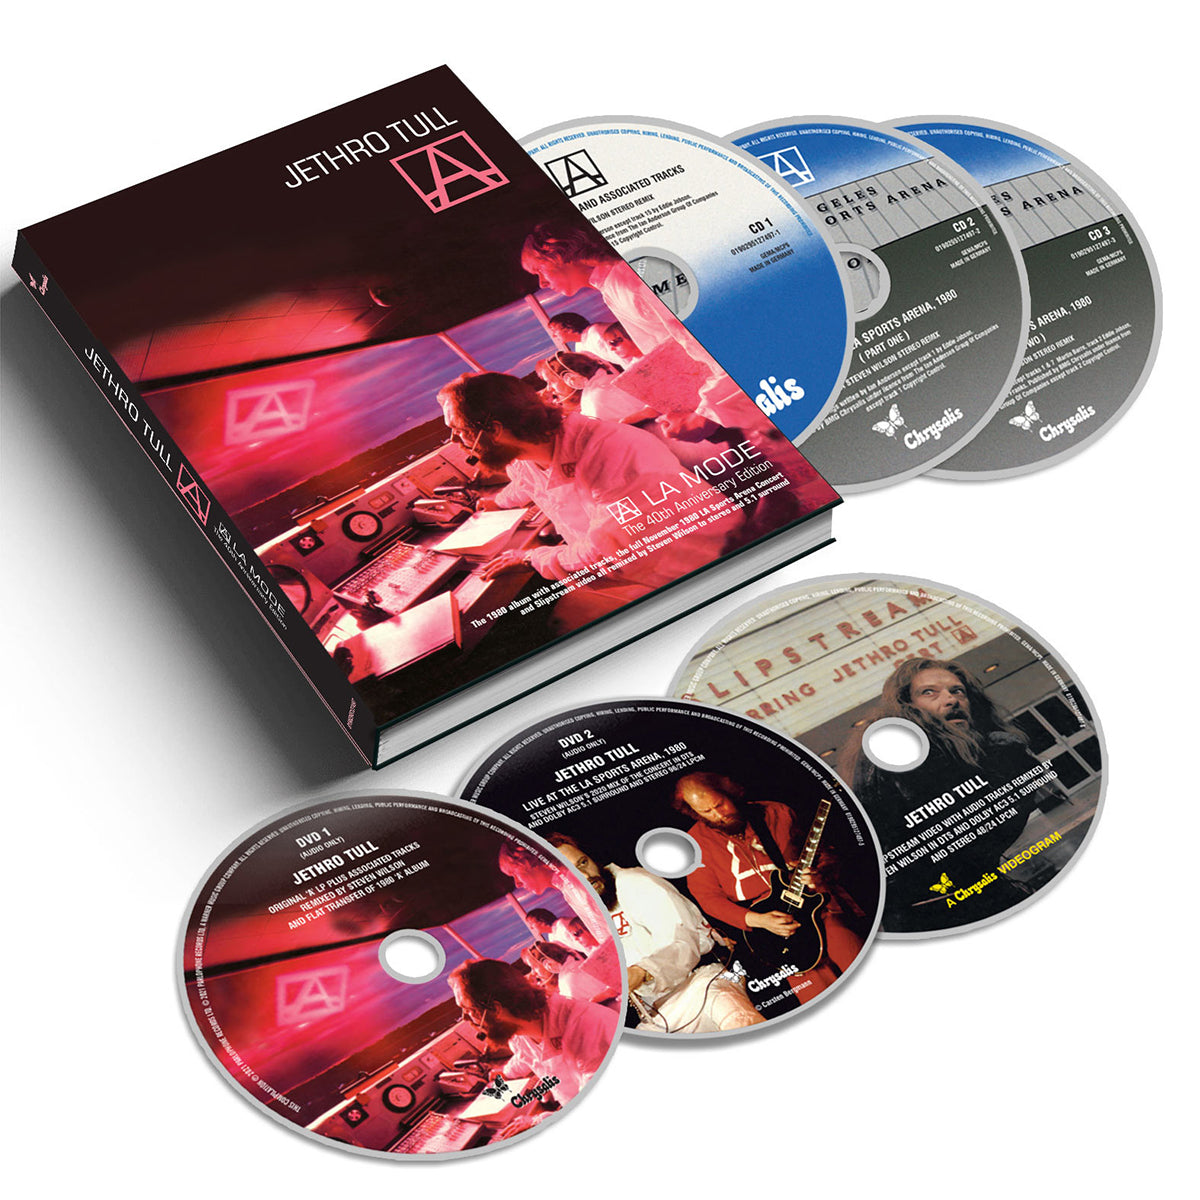 JETHRO TULL - A (A La Mode) : The 40th Anniversary Edition - 3CD/3DVD - Deluxe Edition